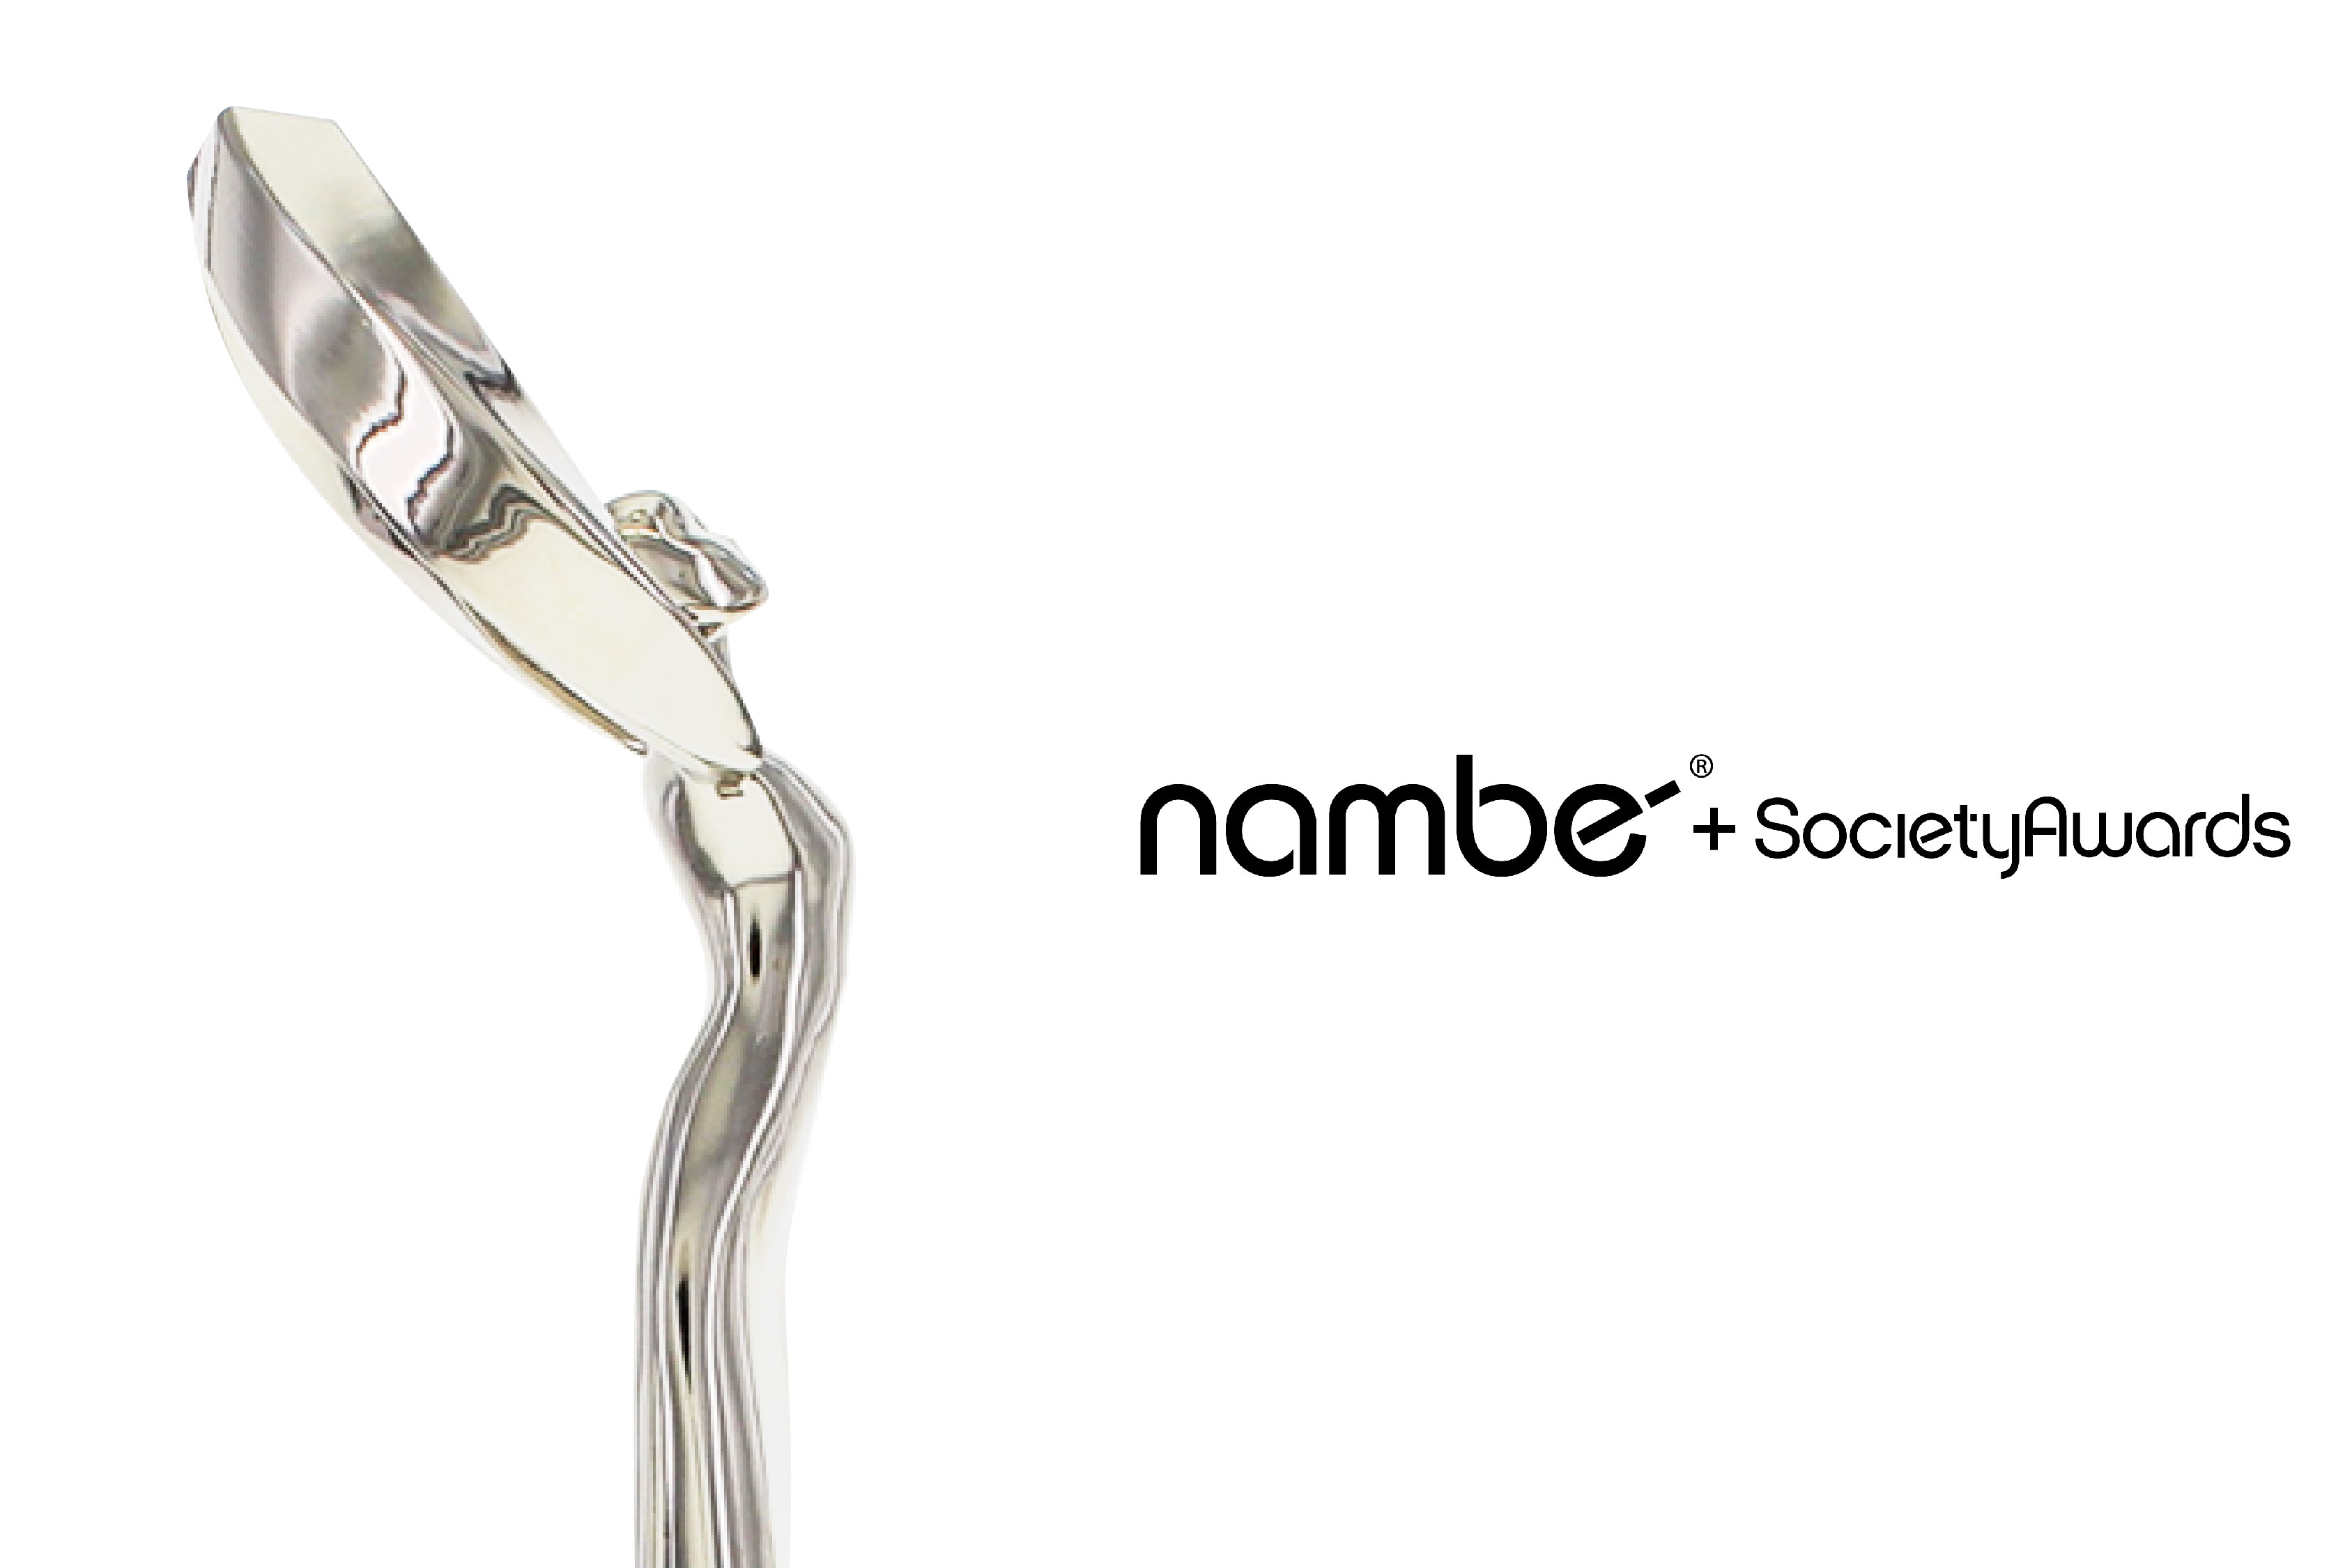 Close-up side angel of the Namb + Society Awards Angel award next to the collaborative logo